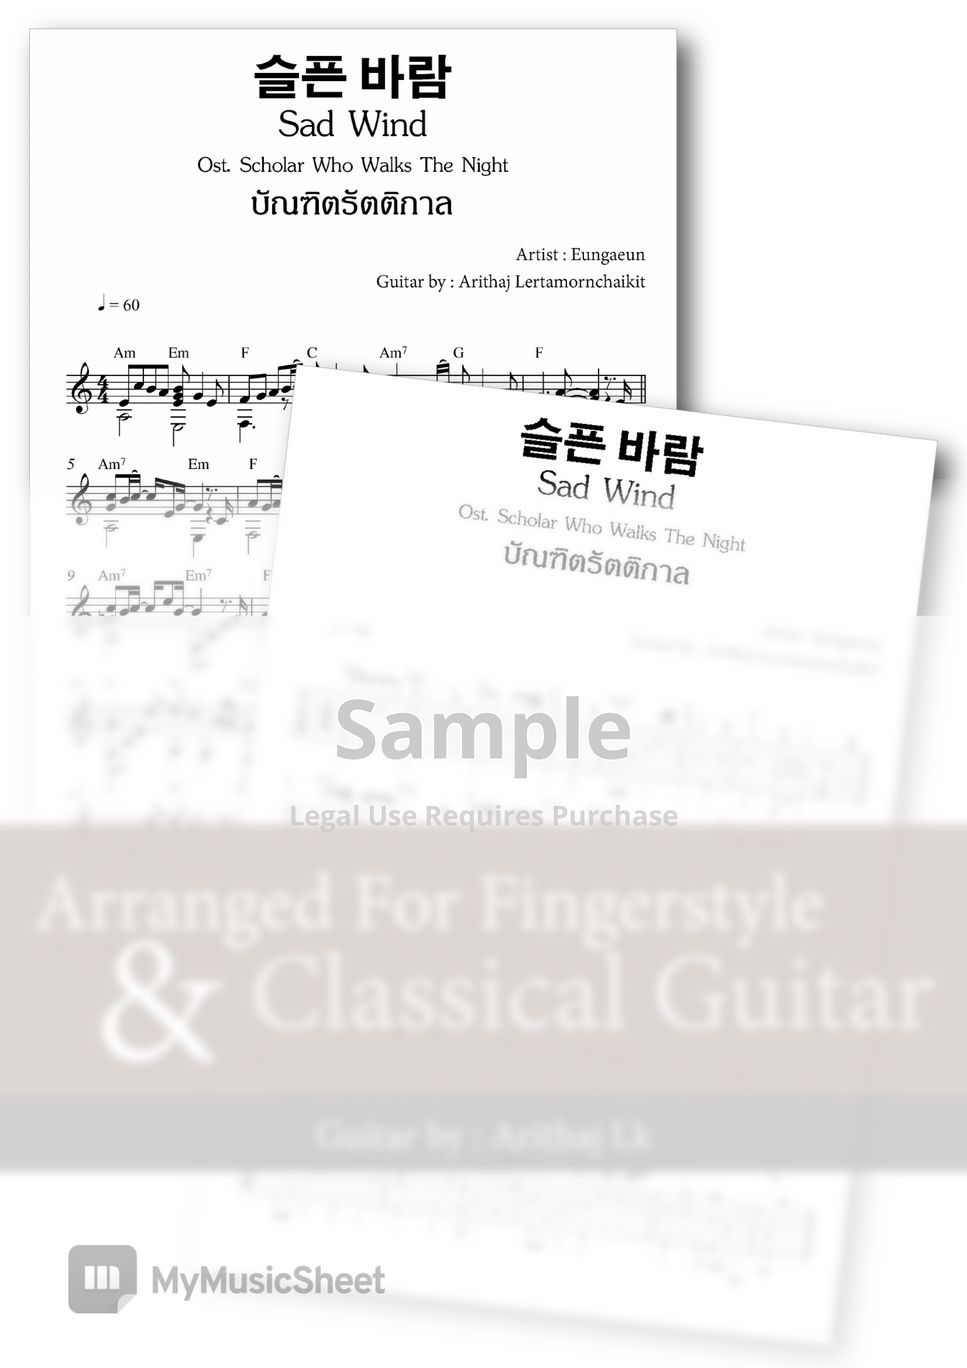 Eungaeun - Sad Wind (Ost.Scholar Who Walks The Night) - Fingerstyle Guitar (Korean Drama) by Arithaj Lk